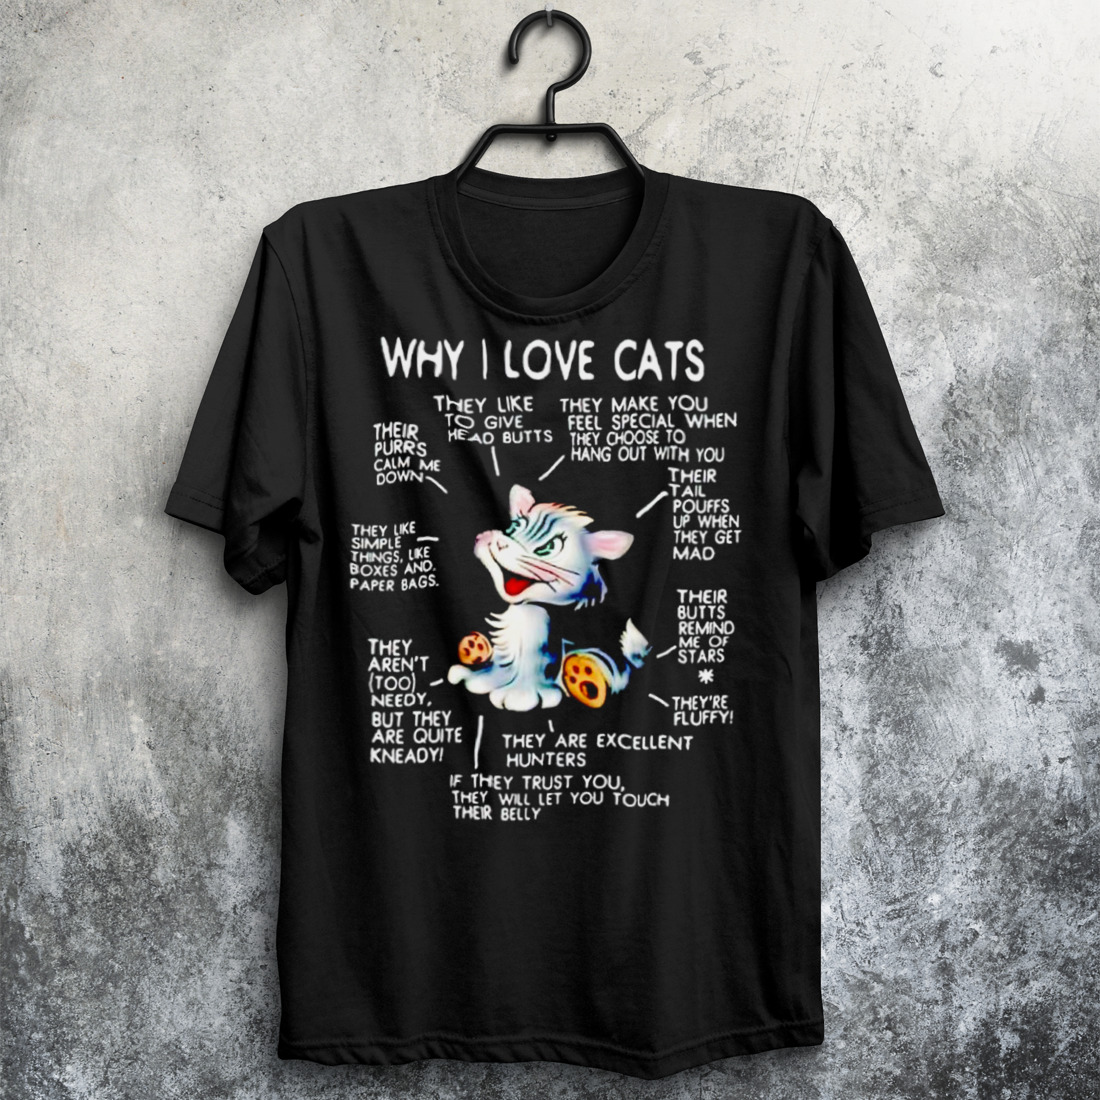 Why I love cats shirt